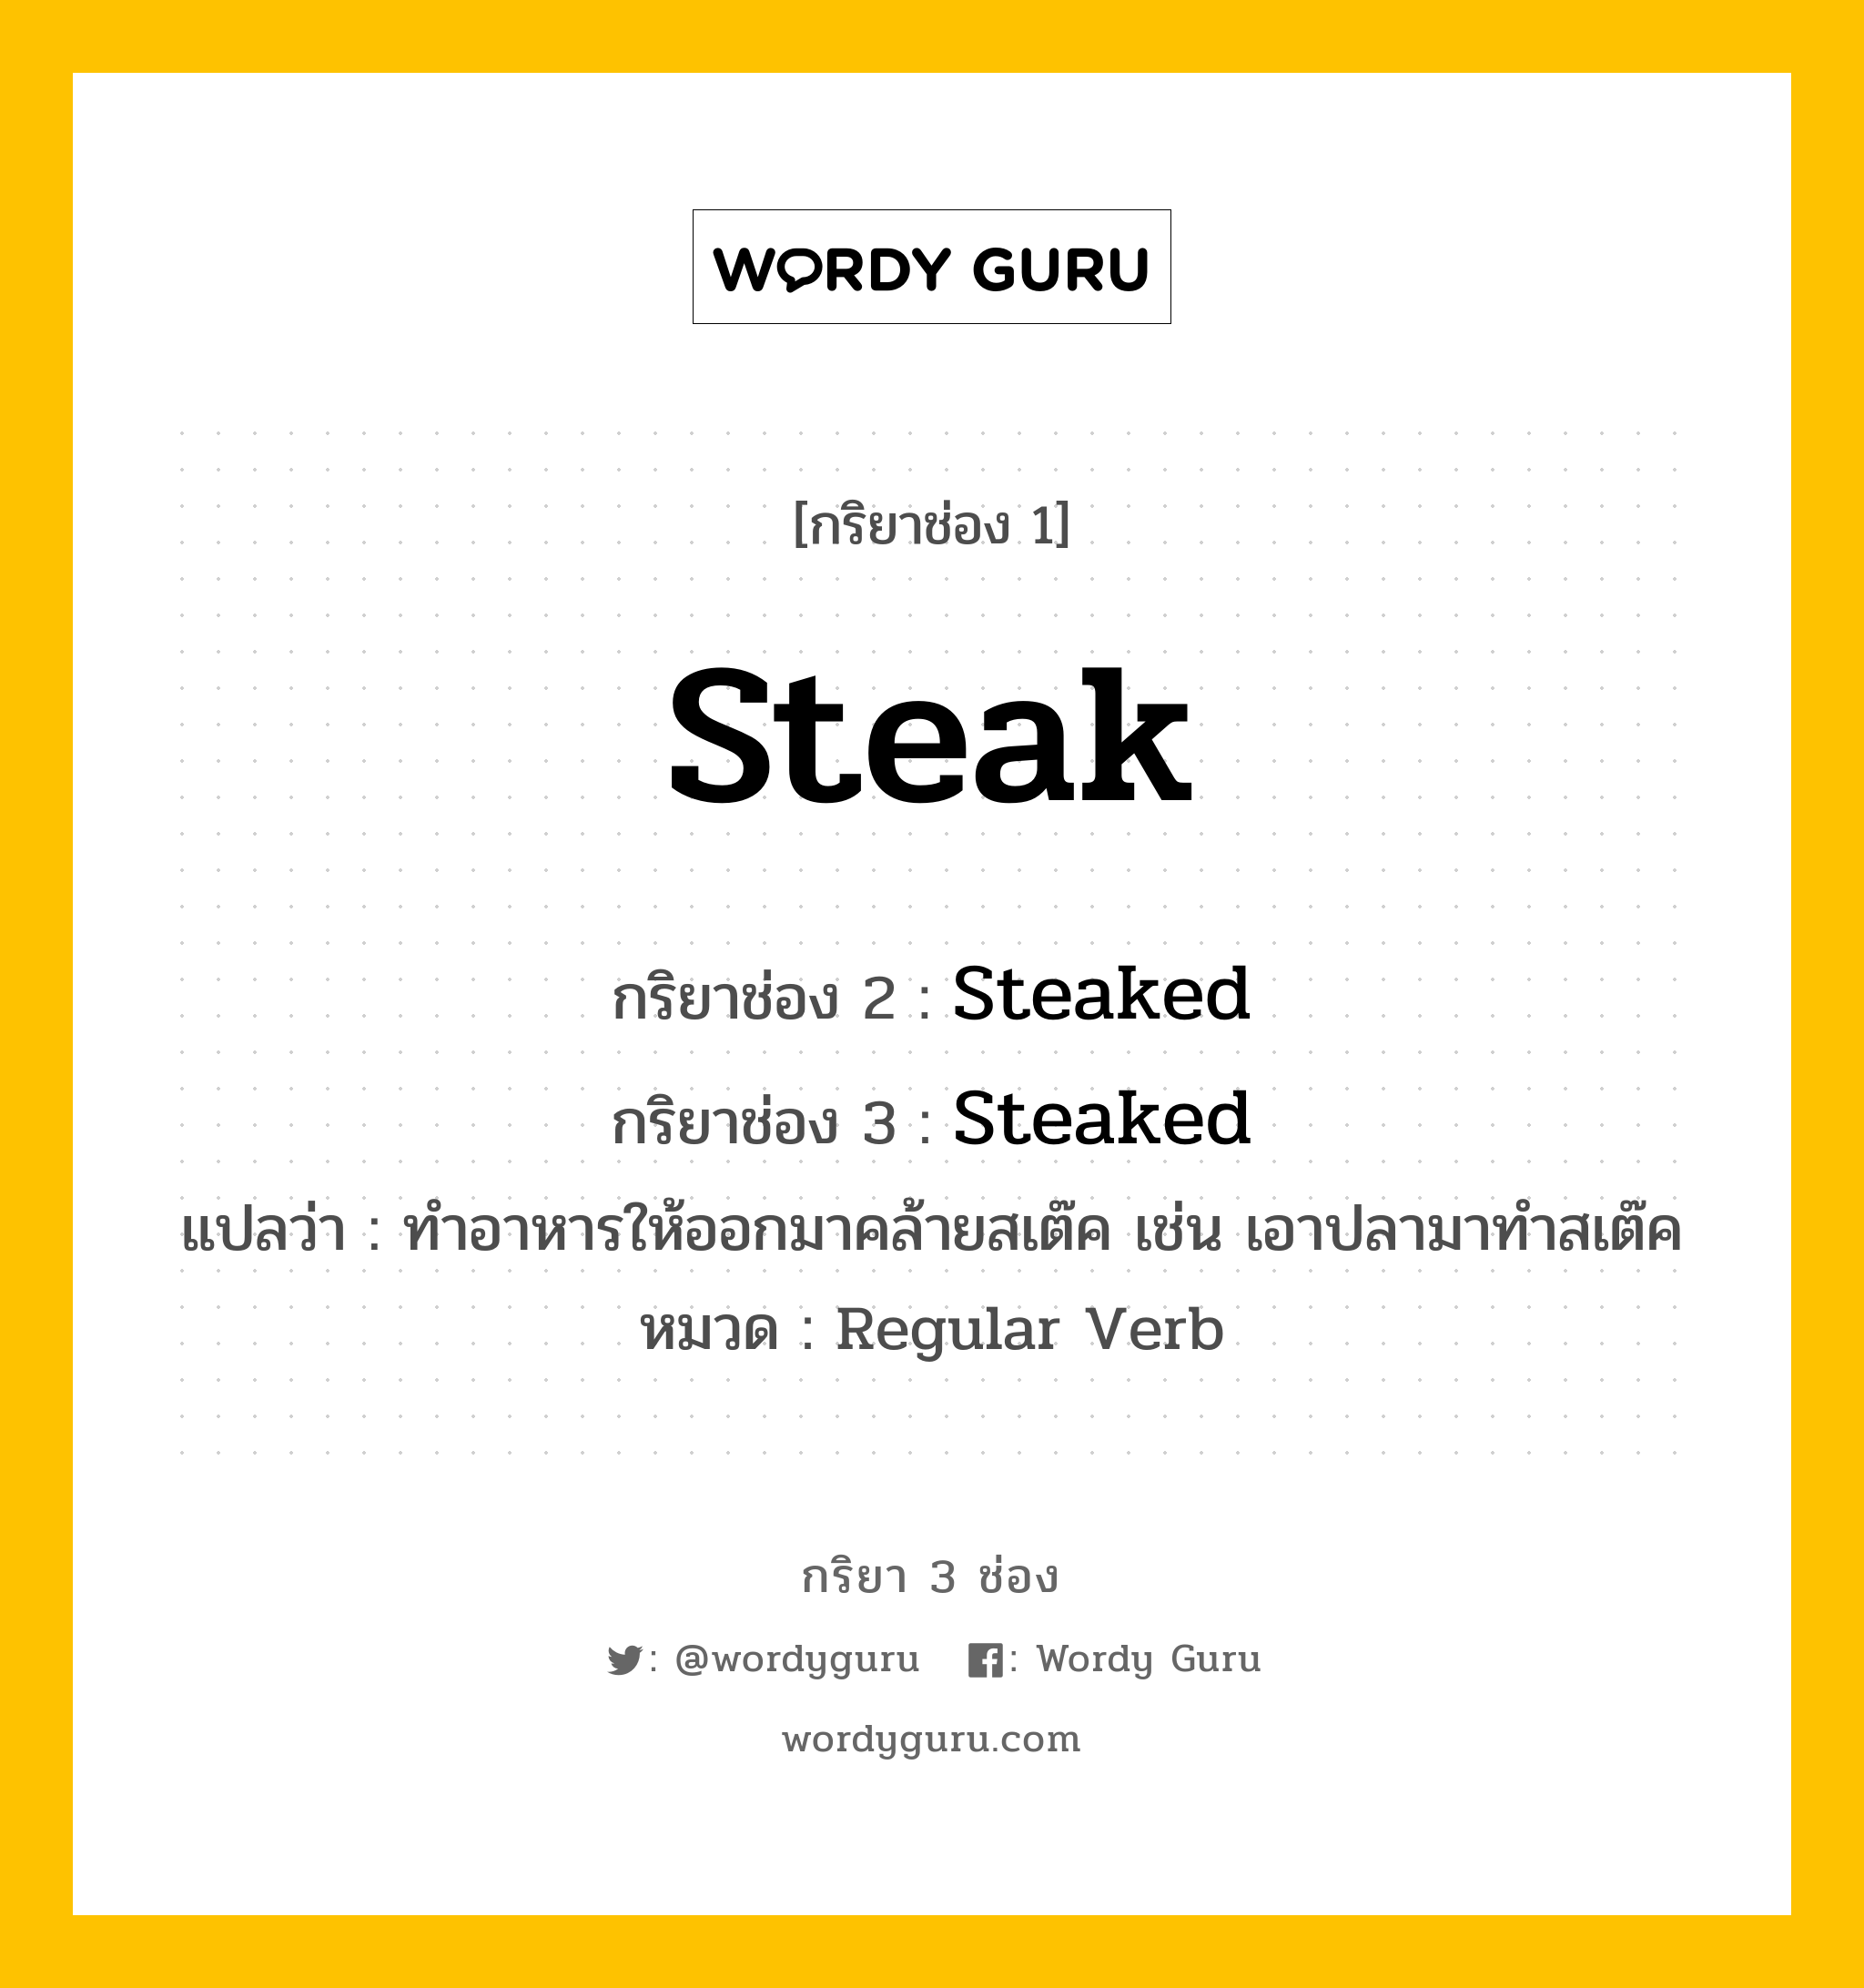 Steak มีกริยา 3 ช่องอะไรบ้าง? คำศัพท์ในกลุ่มประเภท Regular Verb, กริยาช่อง 1 Steak กริยาช่อง 2 Steaked กริยาช่อง 3 Steaked แปลว่า ทำอาหารให้ออกมาคล้ายสเต๊ค เช่น เอาปลามาทำสเต๊ค หมวด Regular Verb หมวด Regular Verb